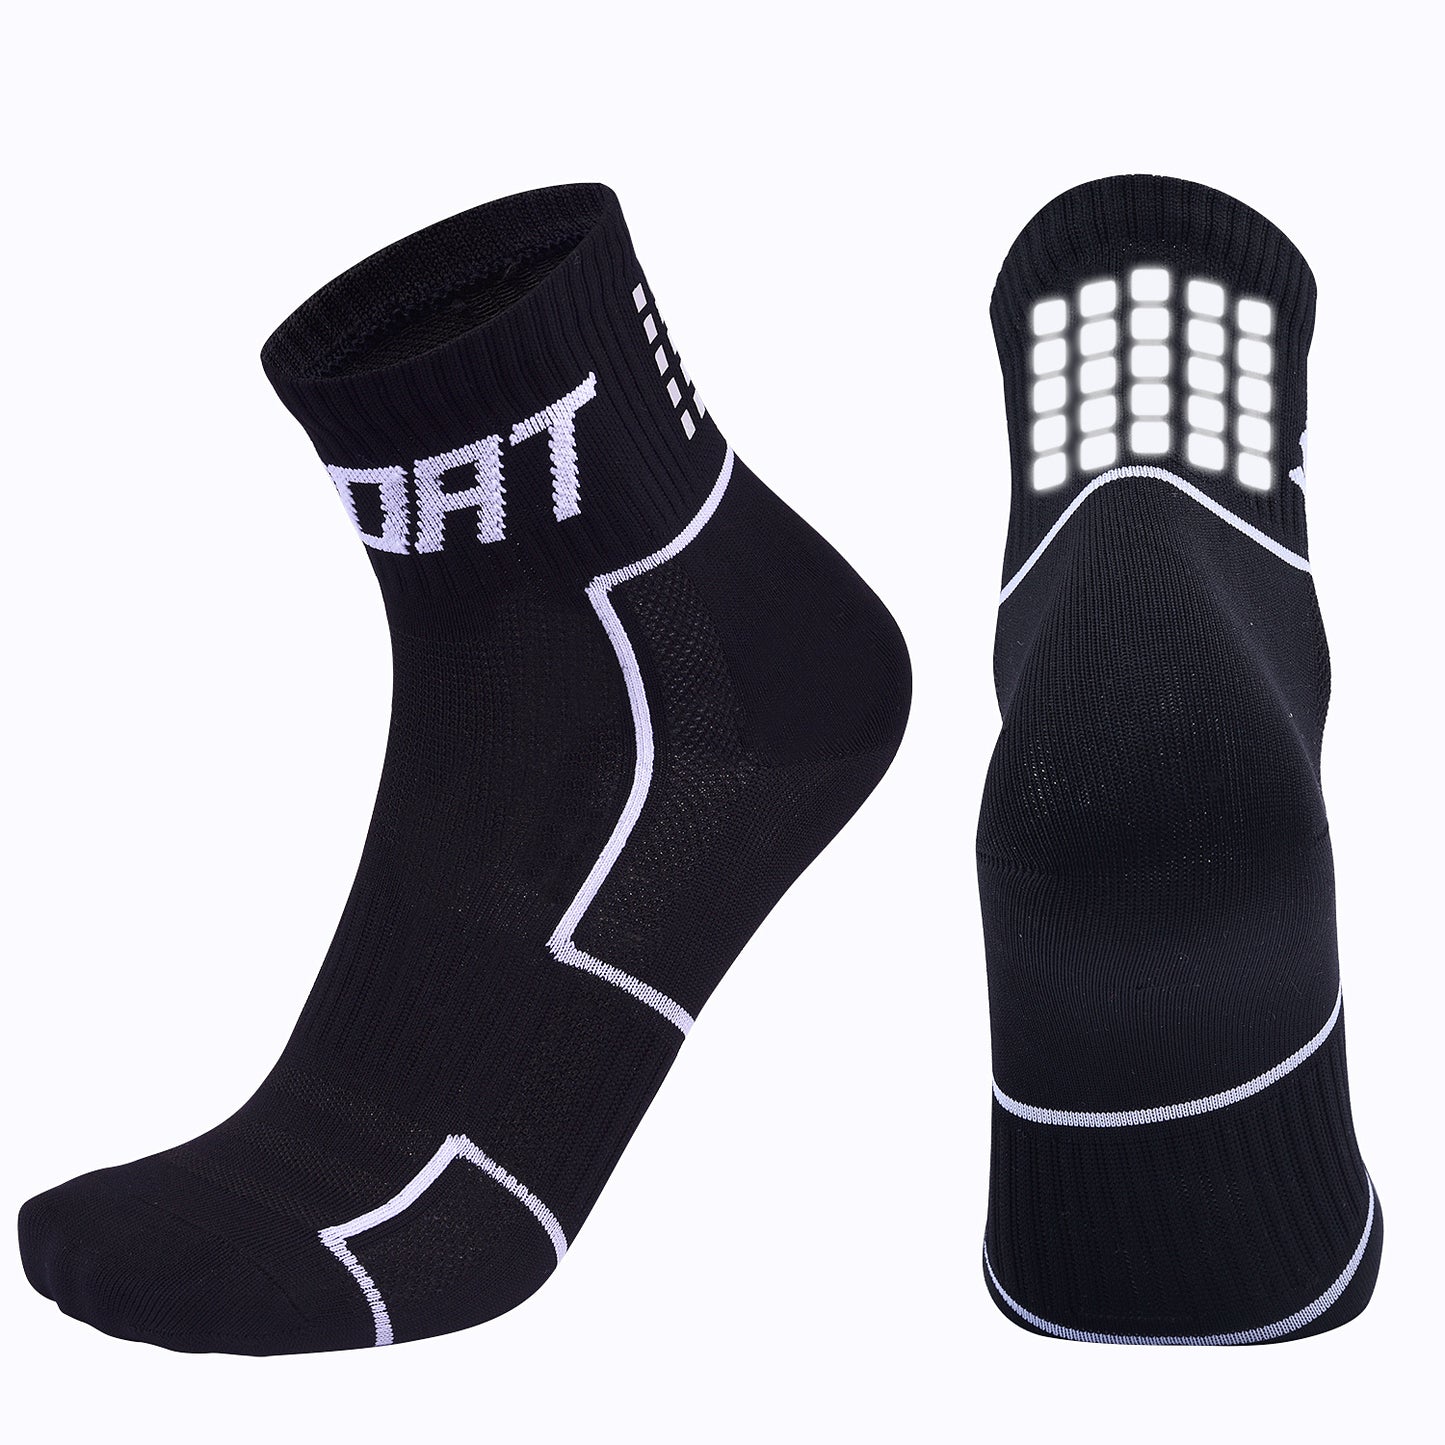 Reflective Cycling Socks, Breathable Bicycle Socks